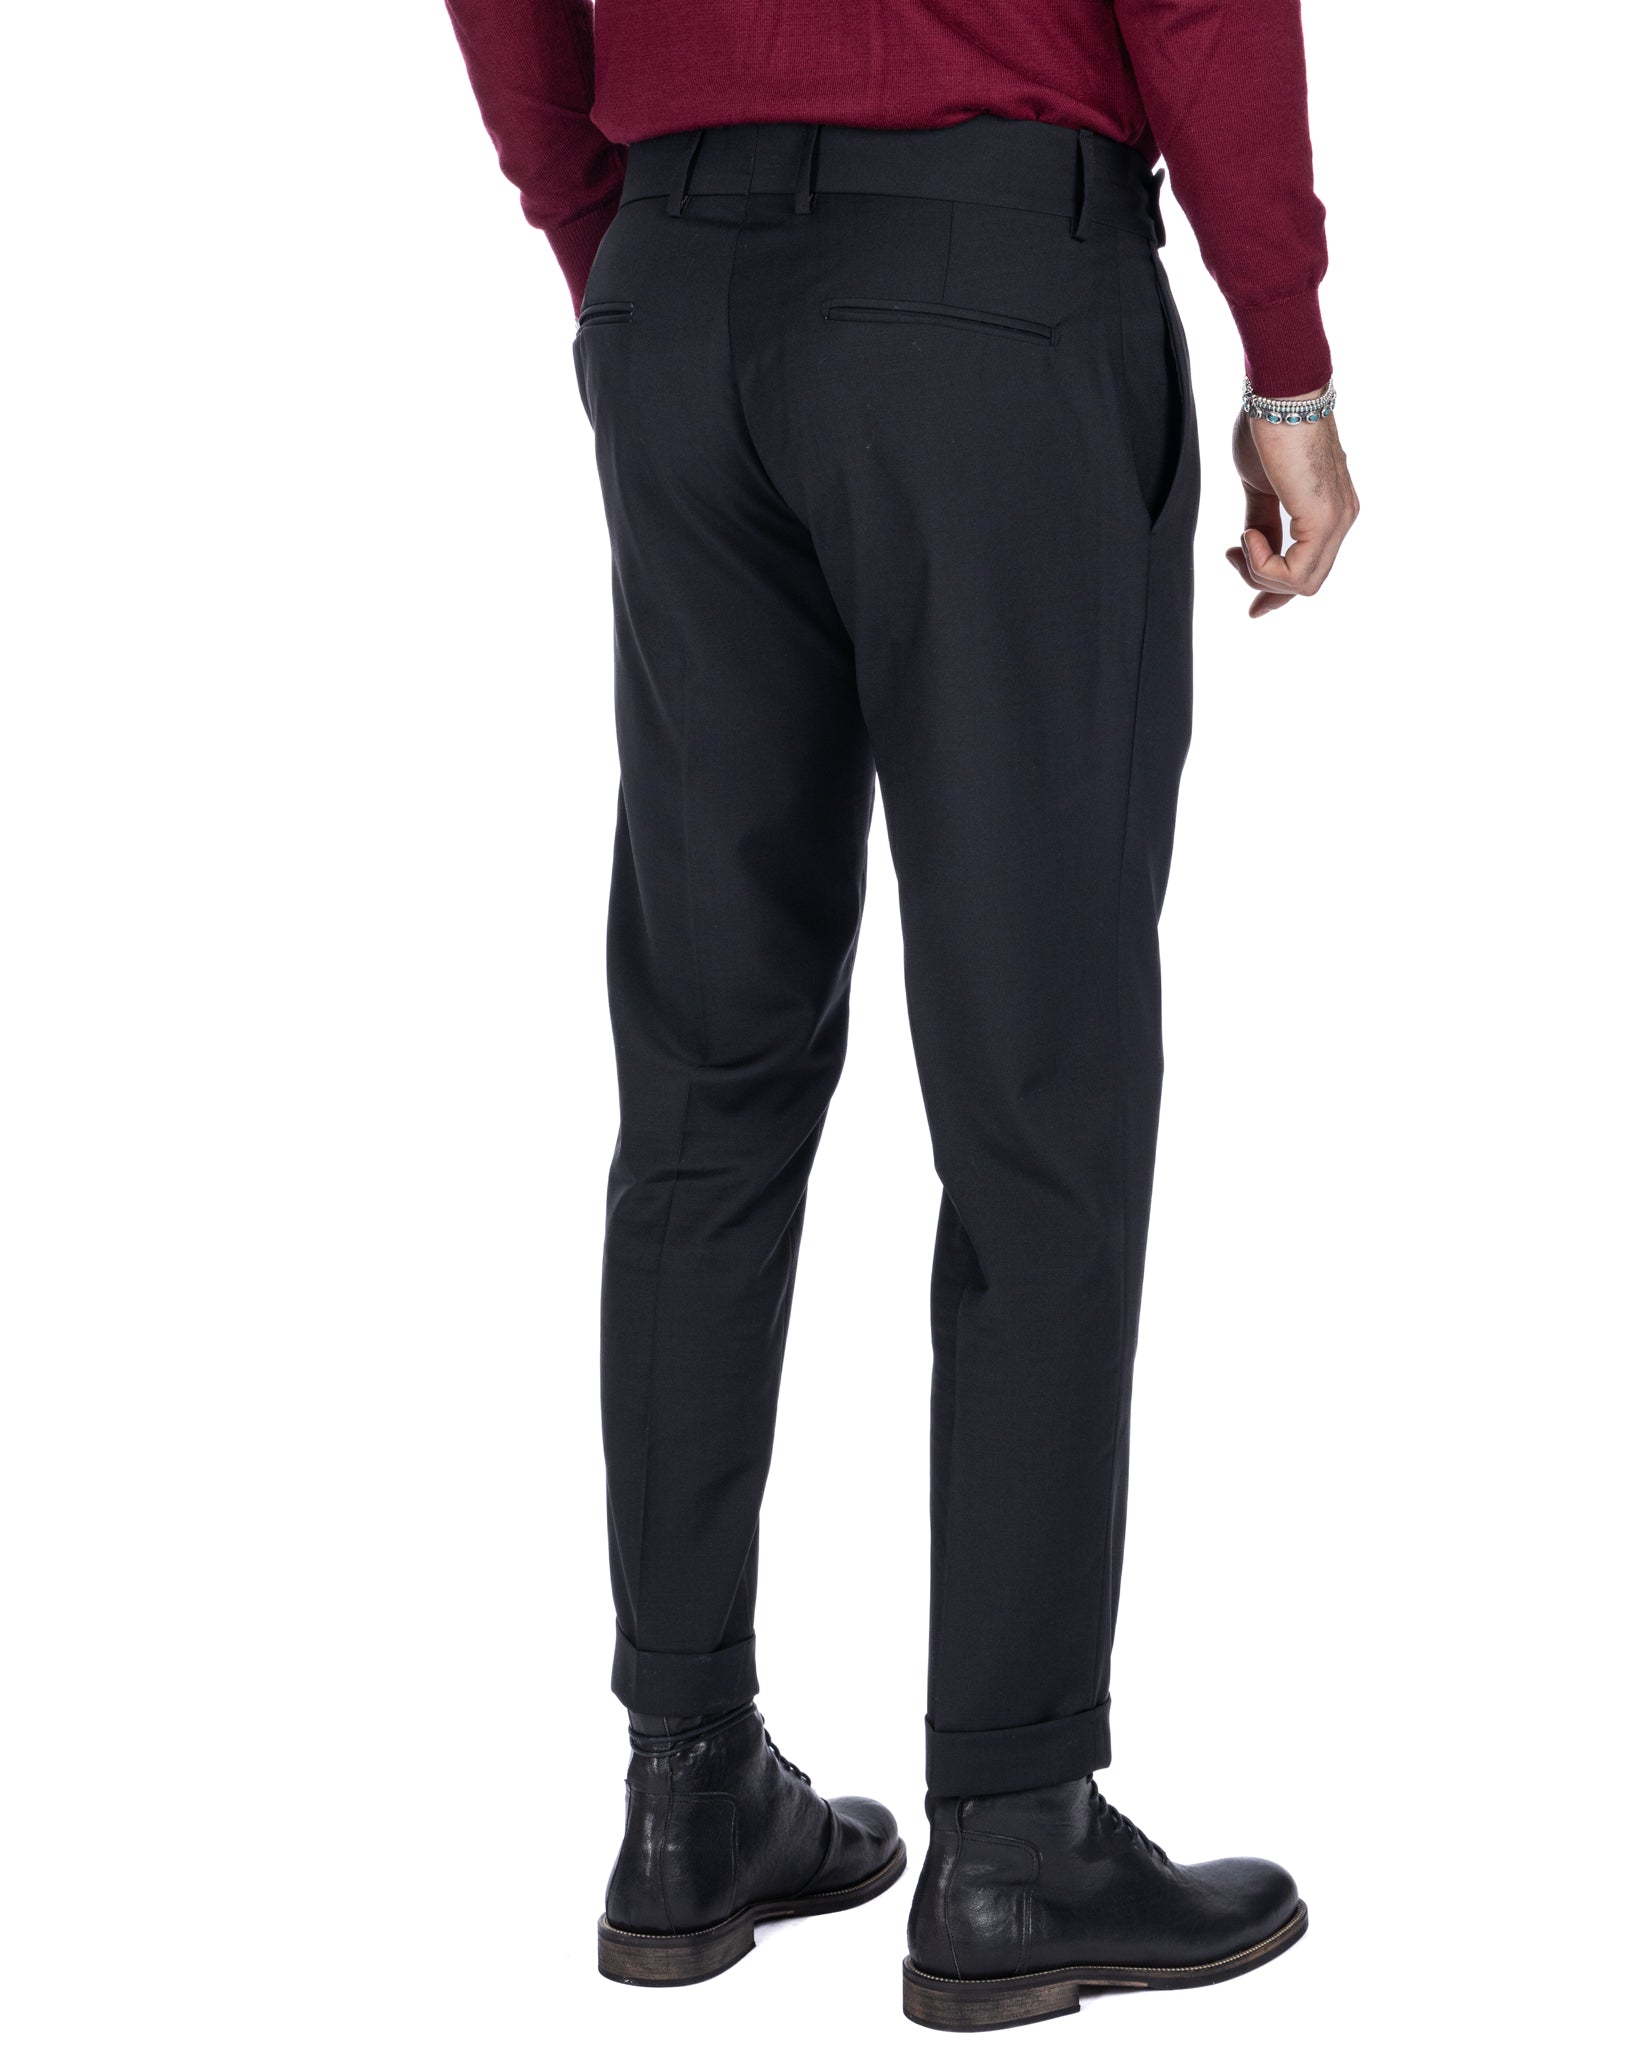 Italian - black high-waisted trousers in wool blend